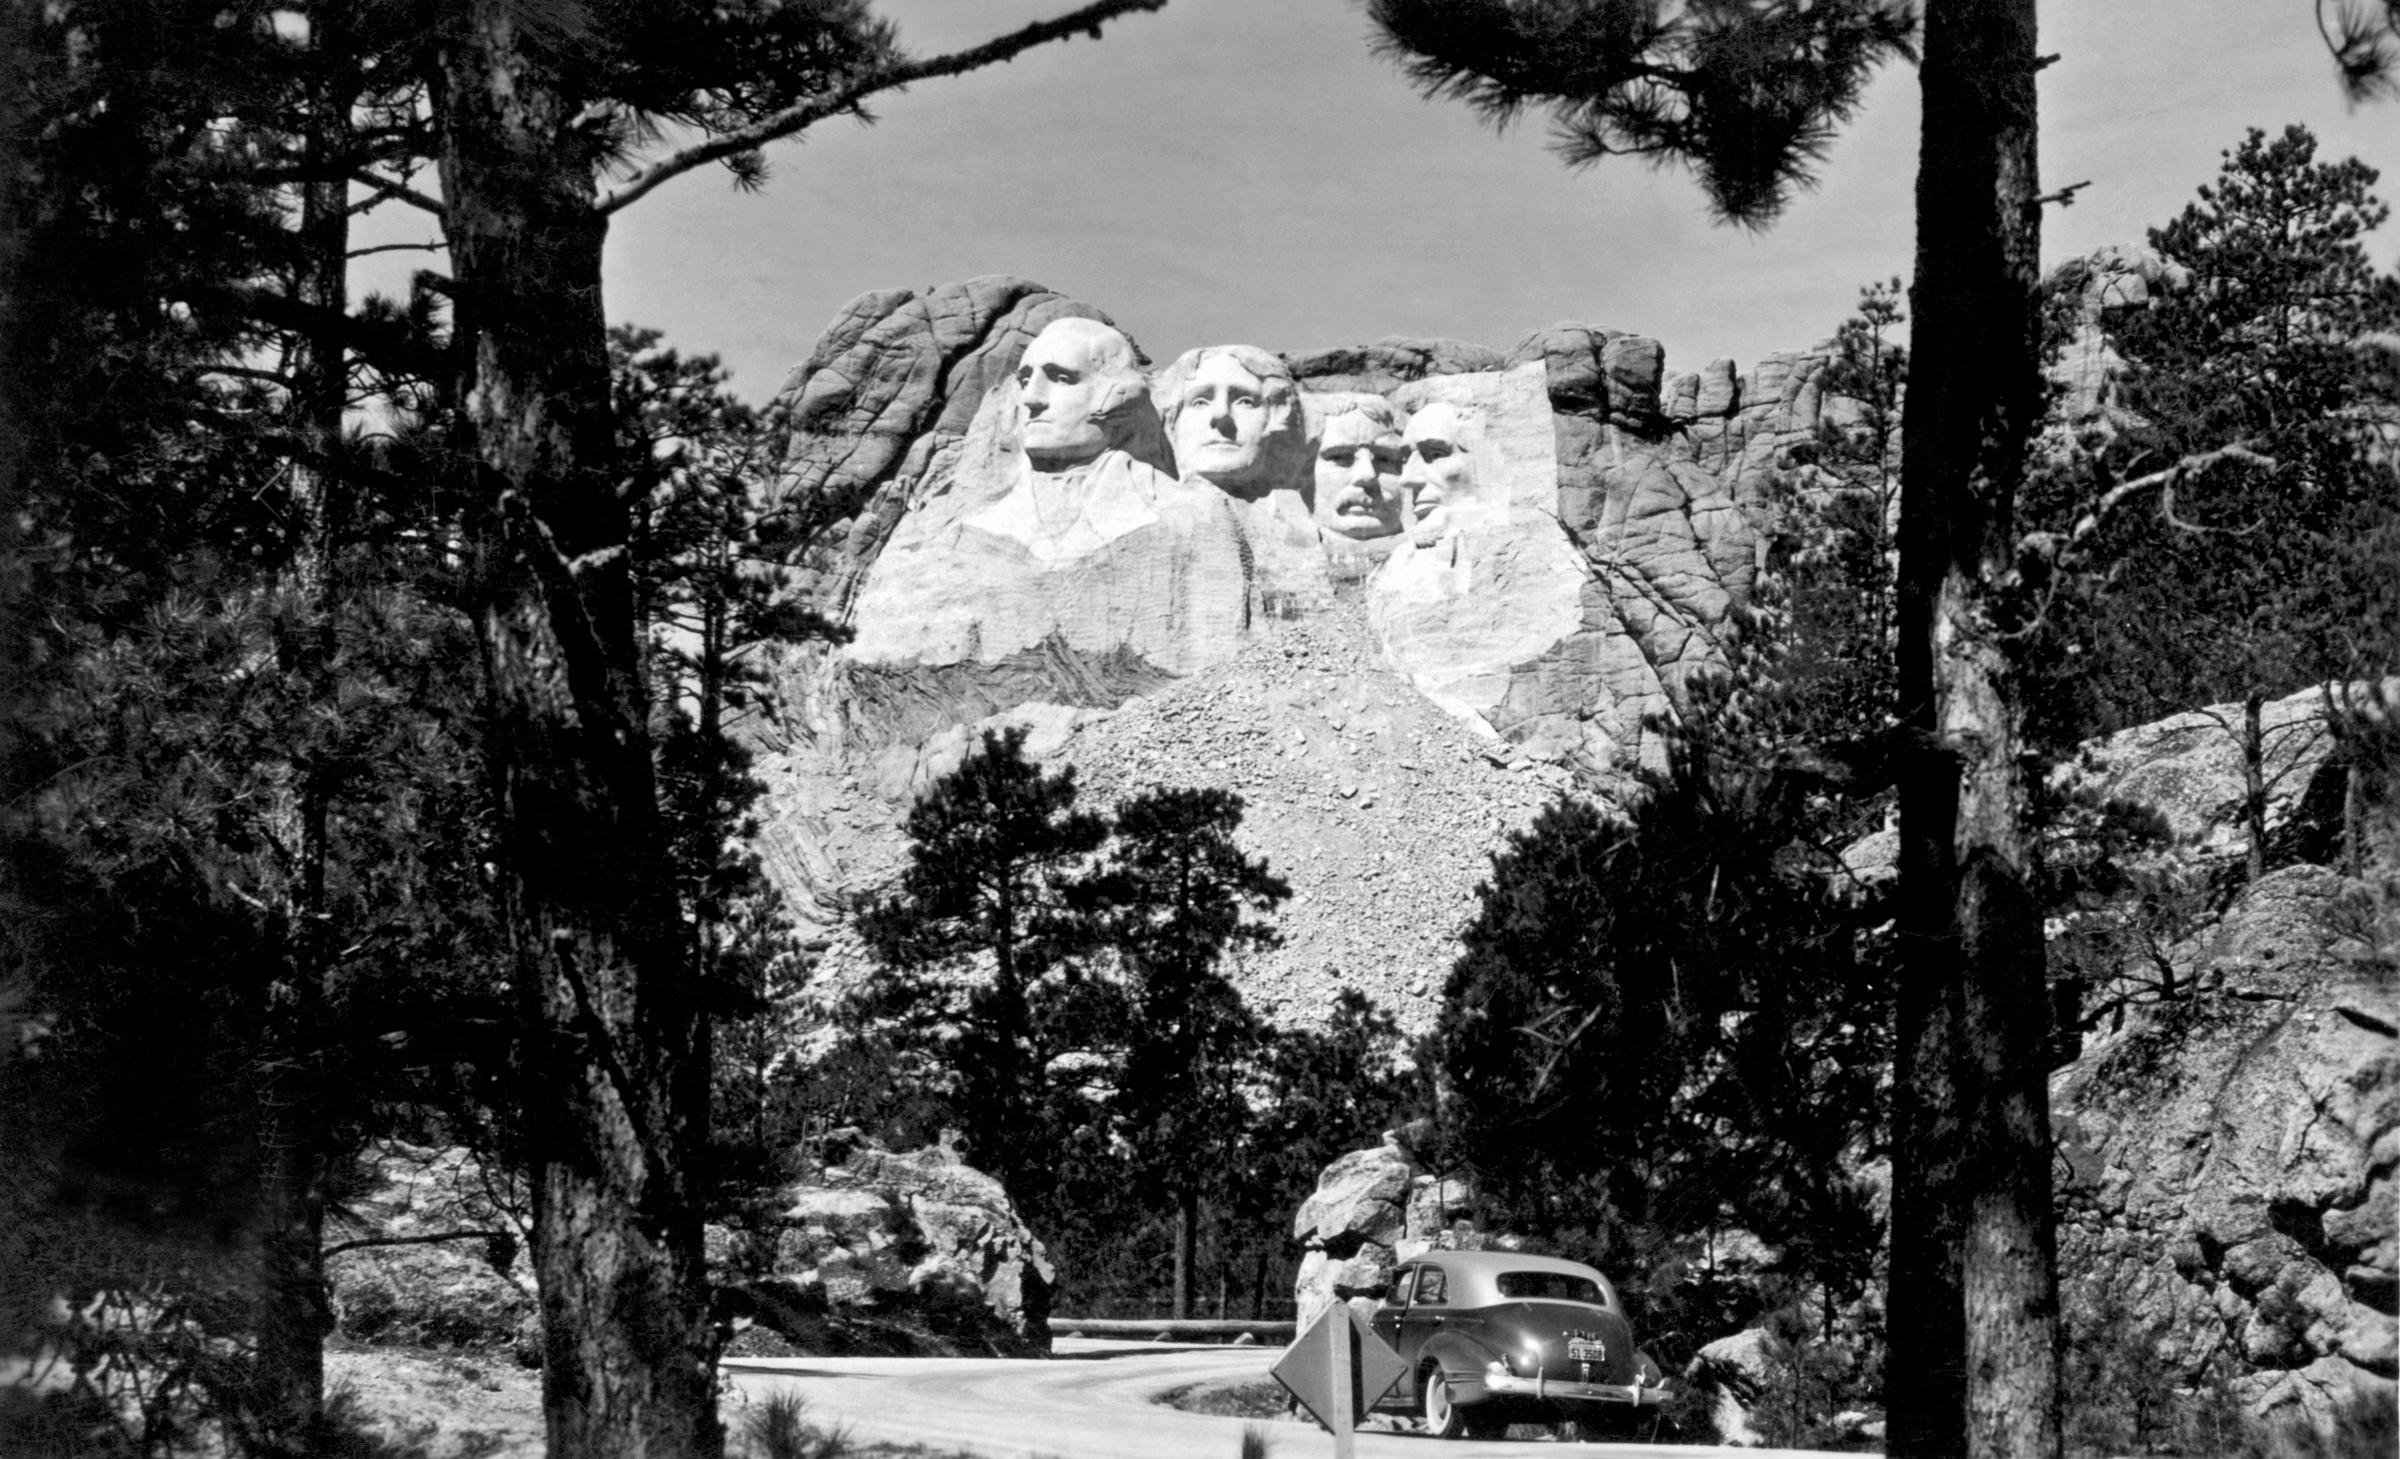 Mount Rushmore In South Dakota